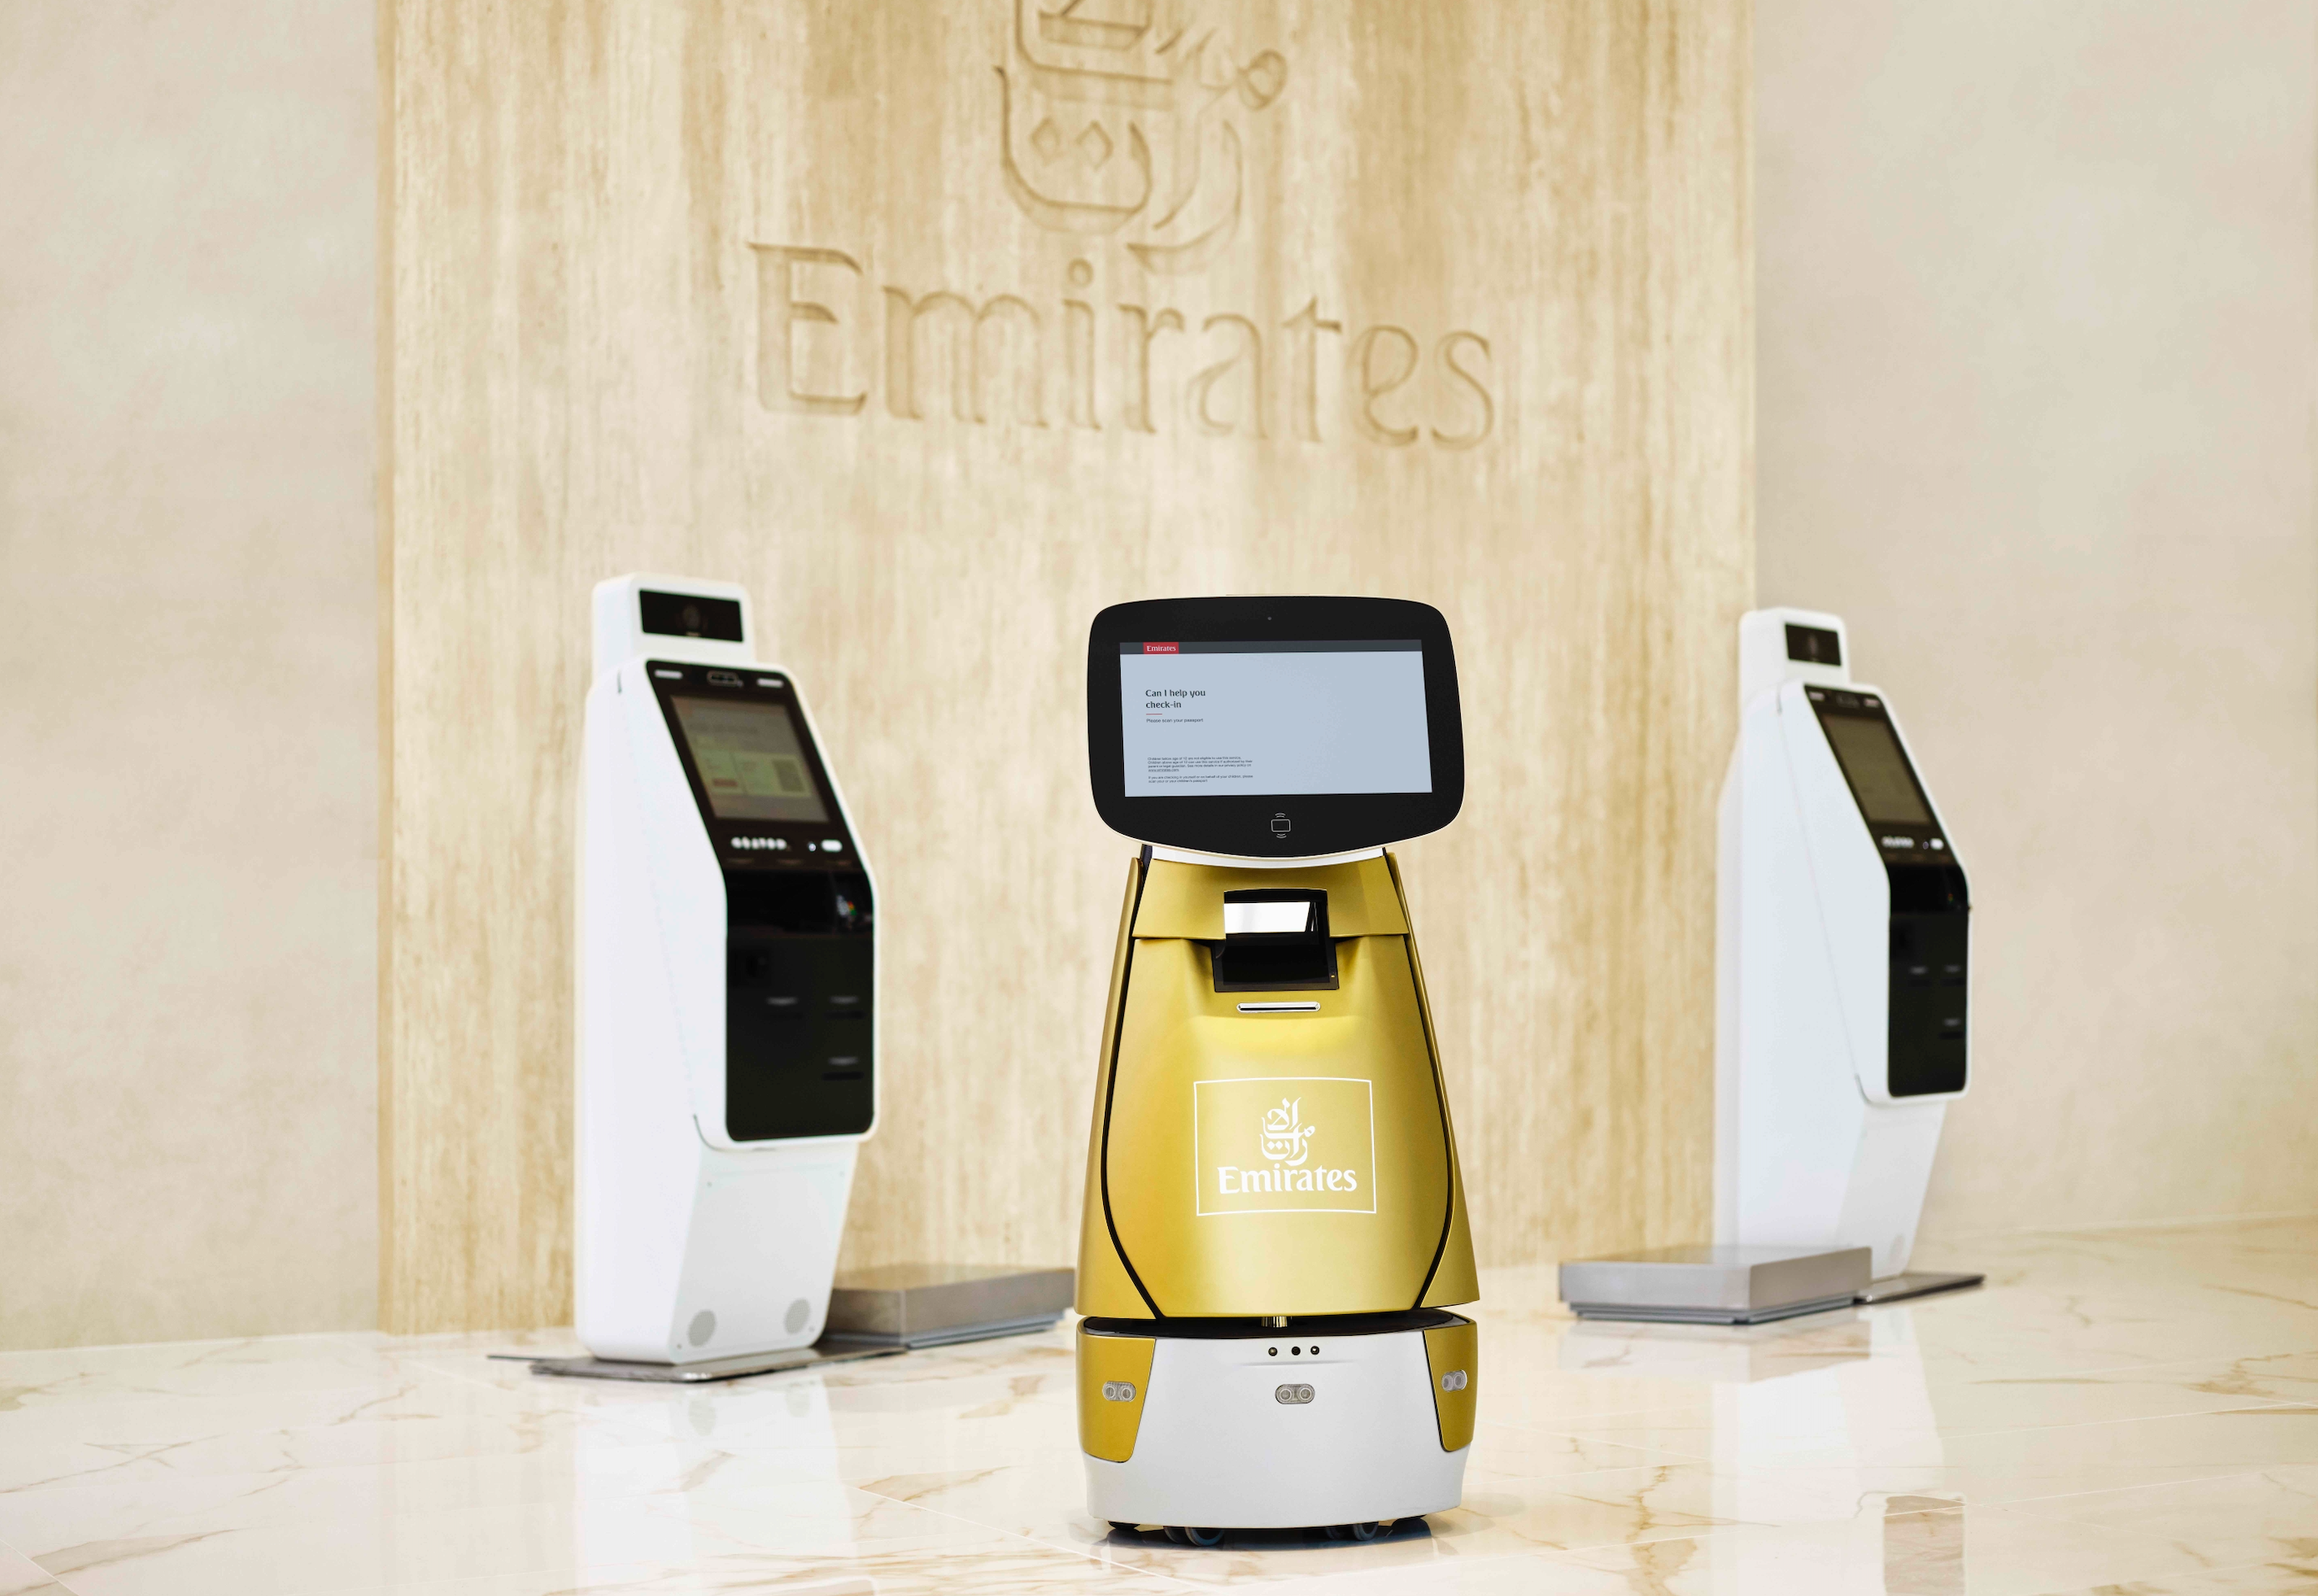 Emirates' Check in Robot Sara